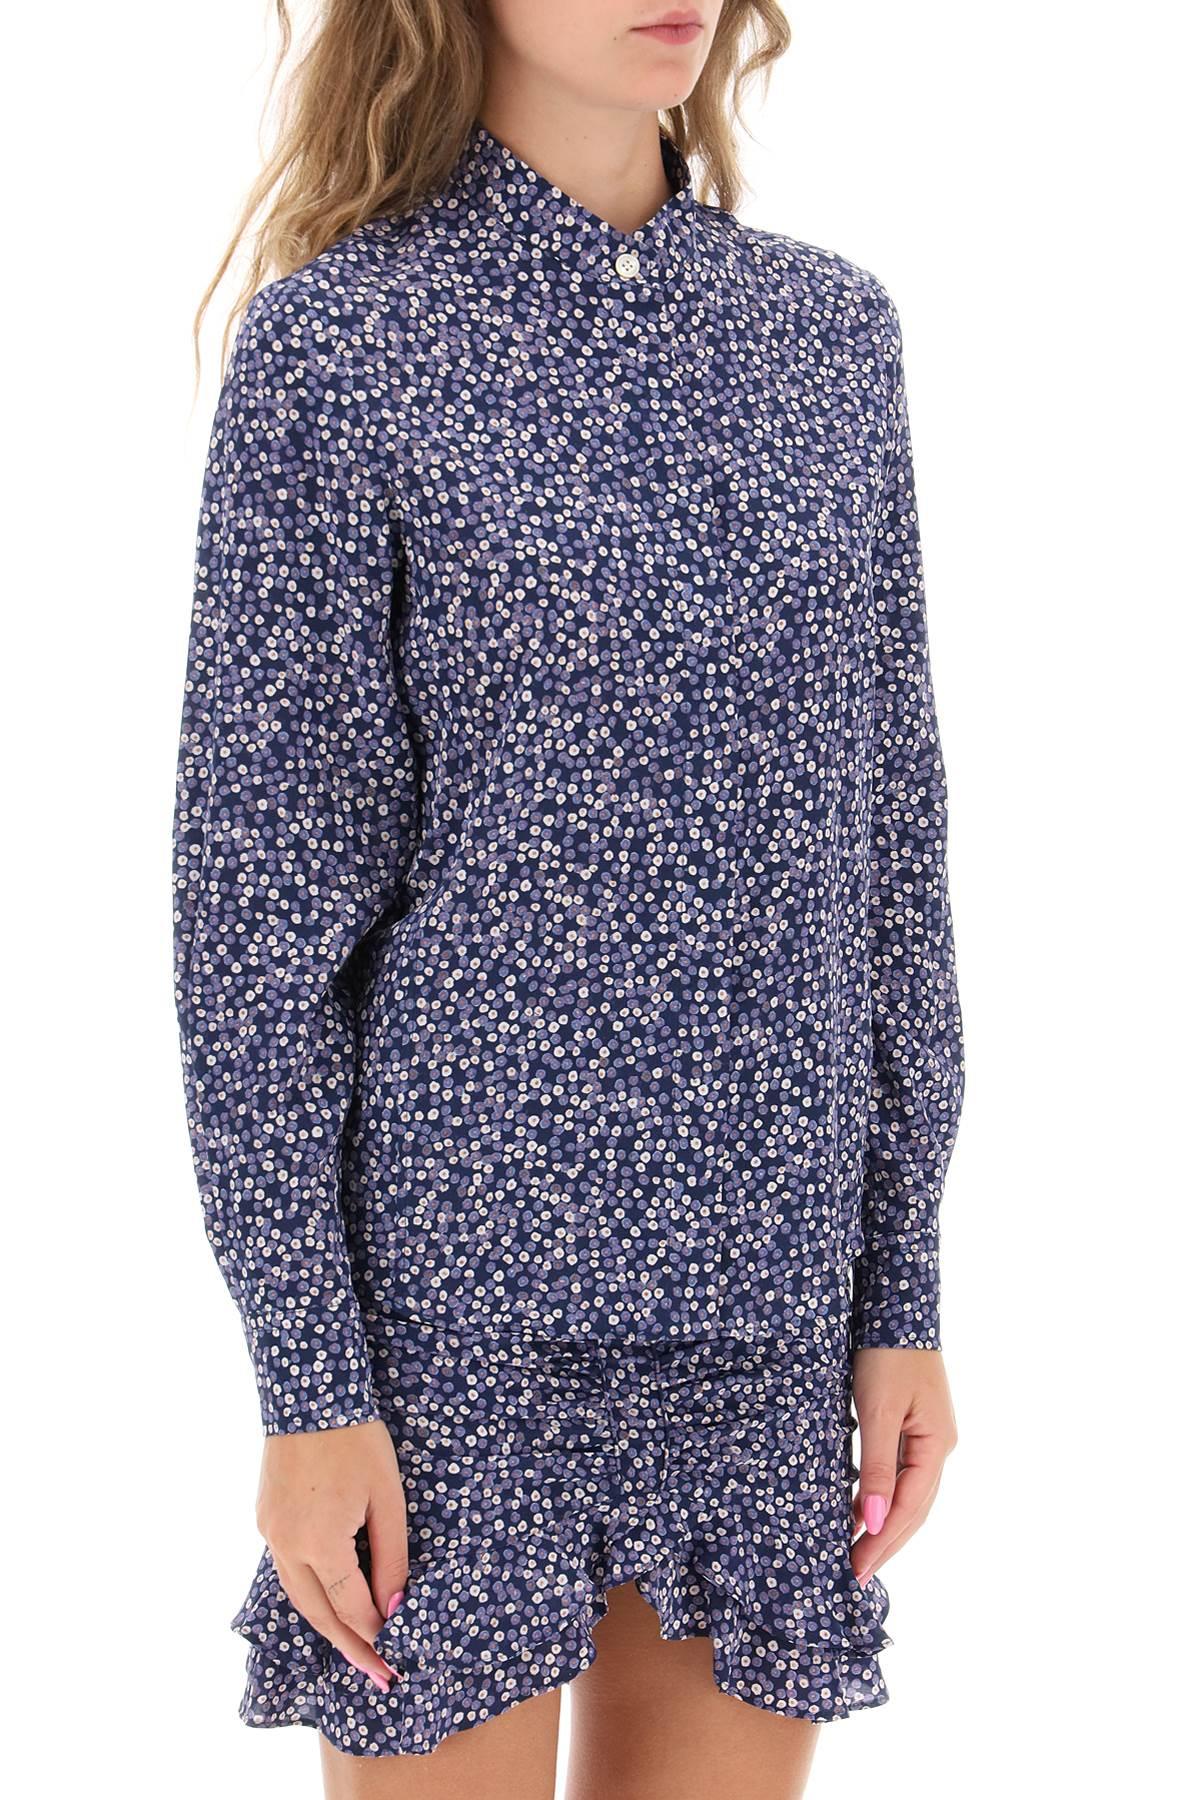 Isabel Marant Ilda Silk Shirt With Floral Print - JOHN JULIA